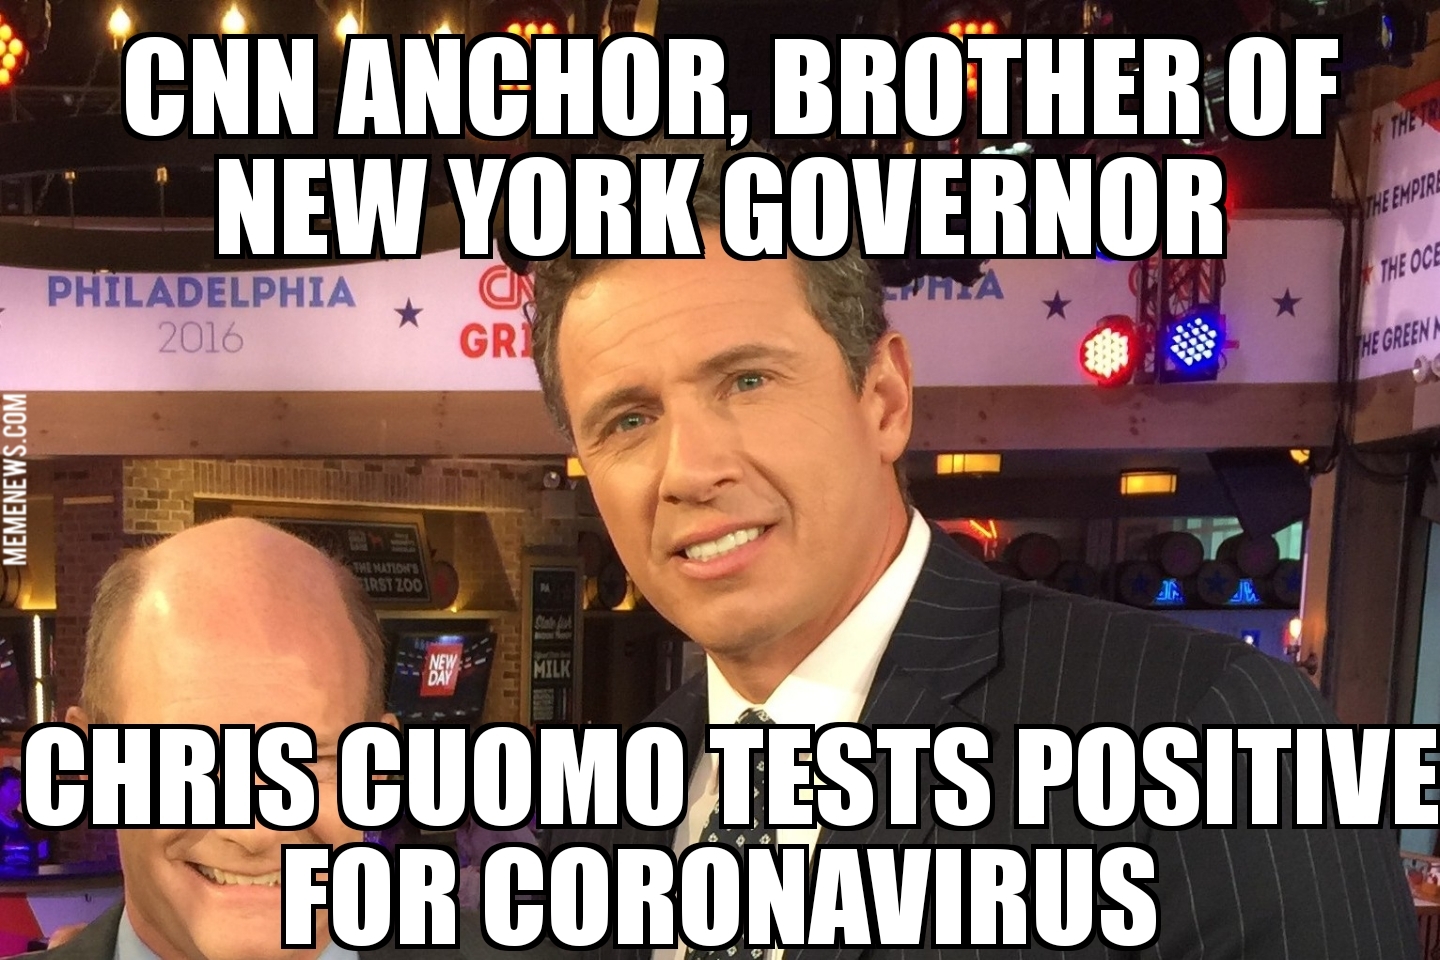 Chris Cuomo positive for coronavirus